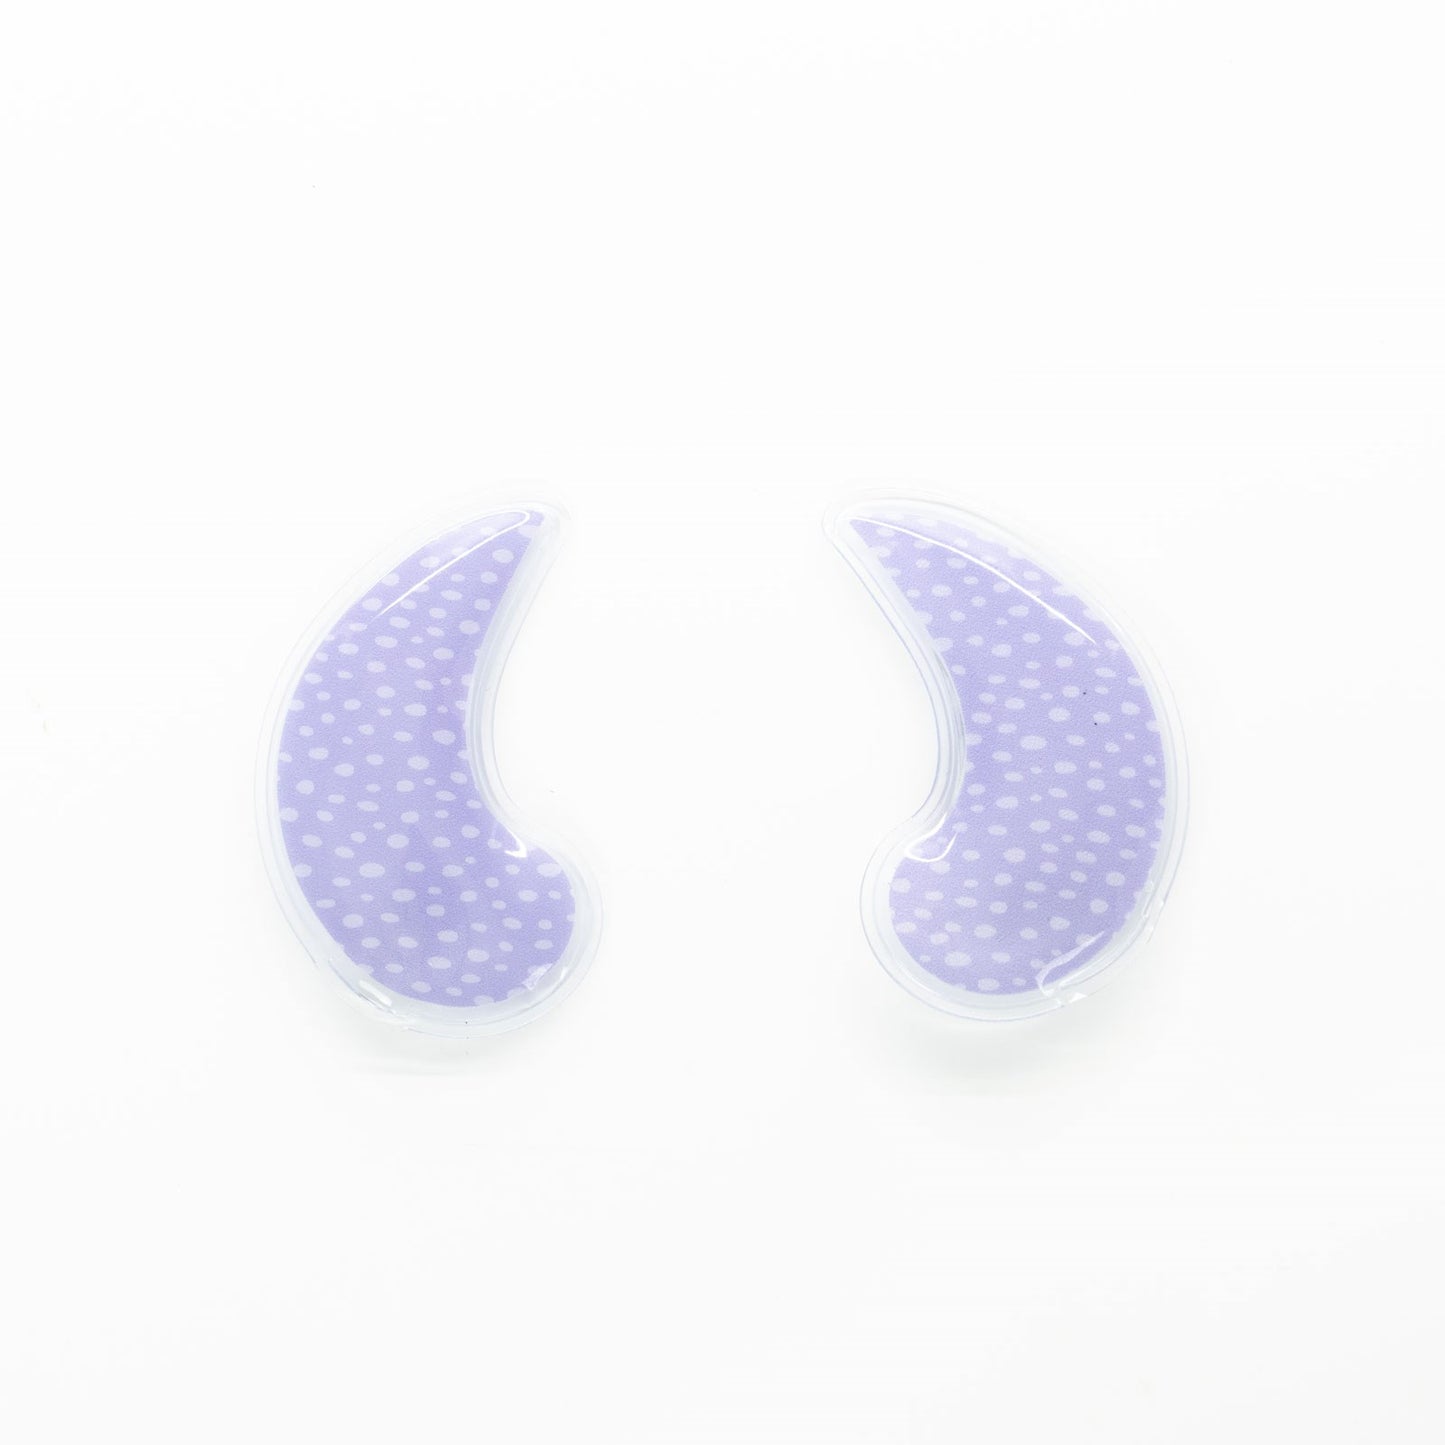 lavender under eye gel pads on a white background